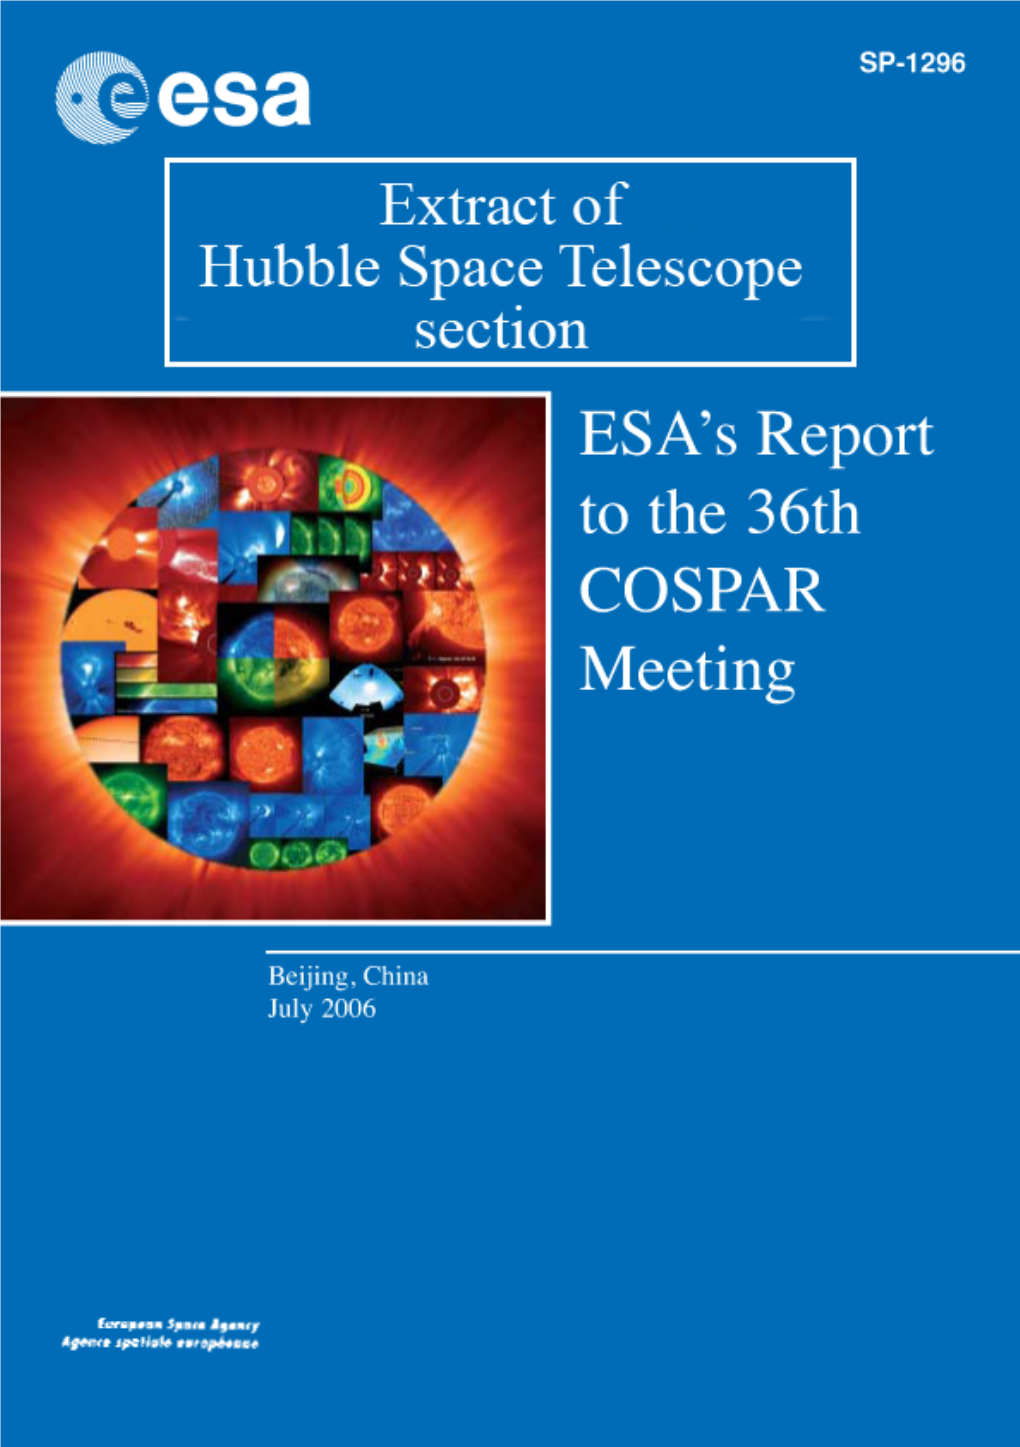 2.1 Hubble Space Telescope